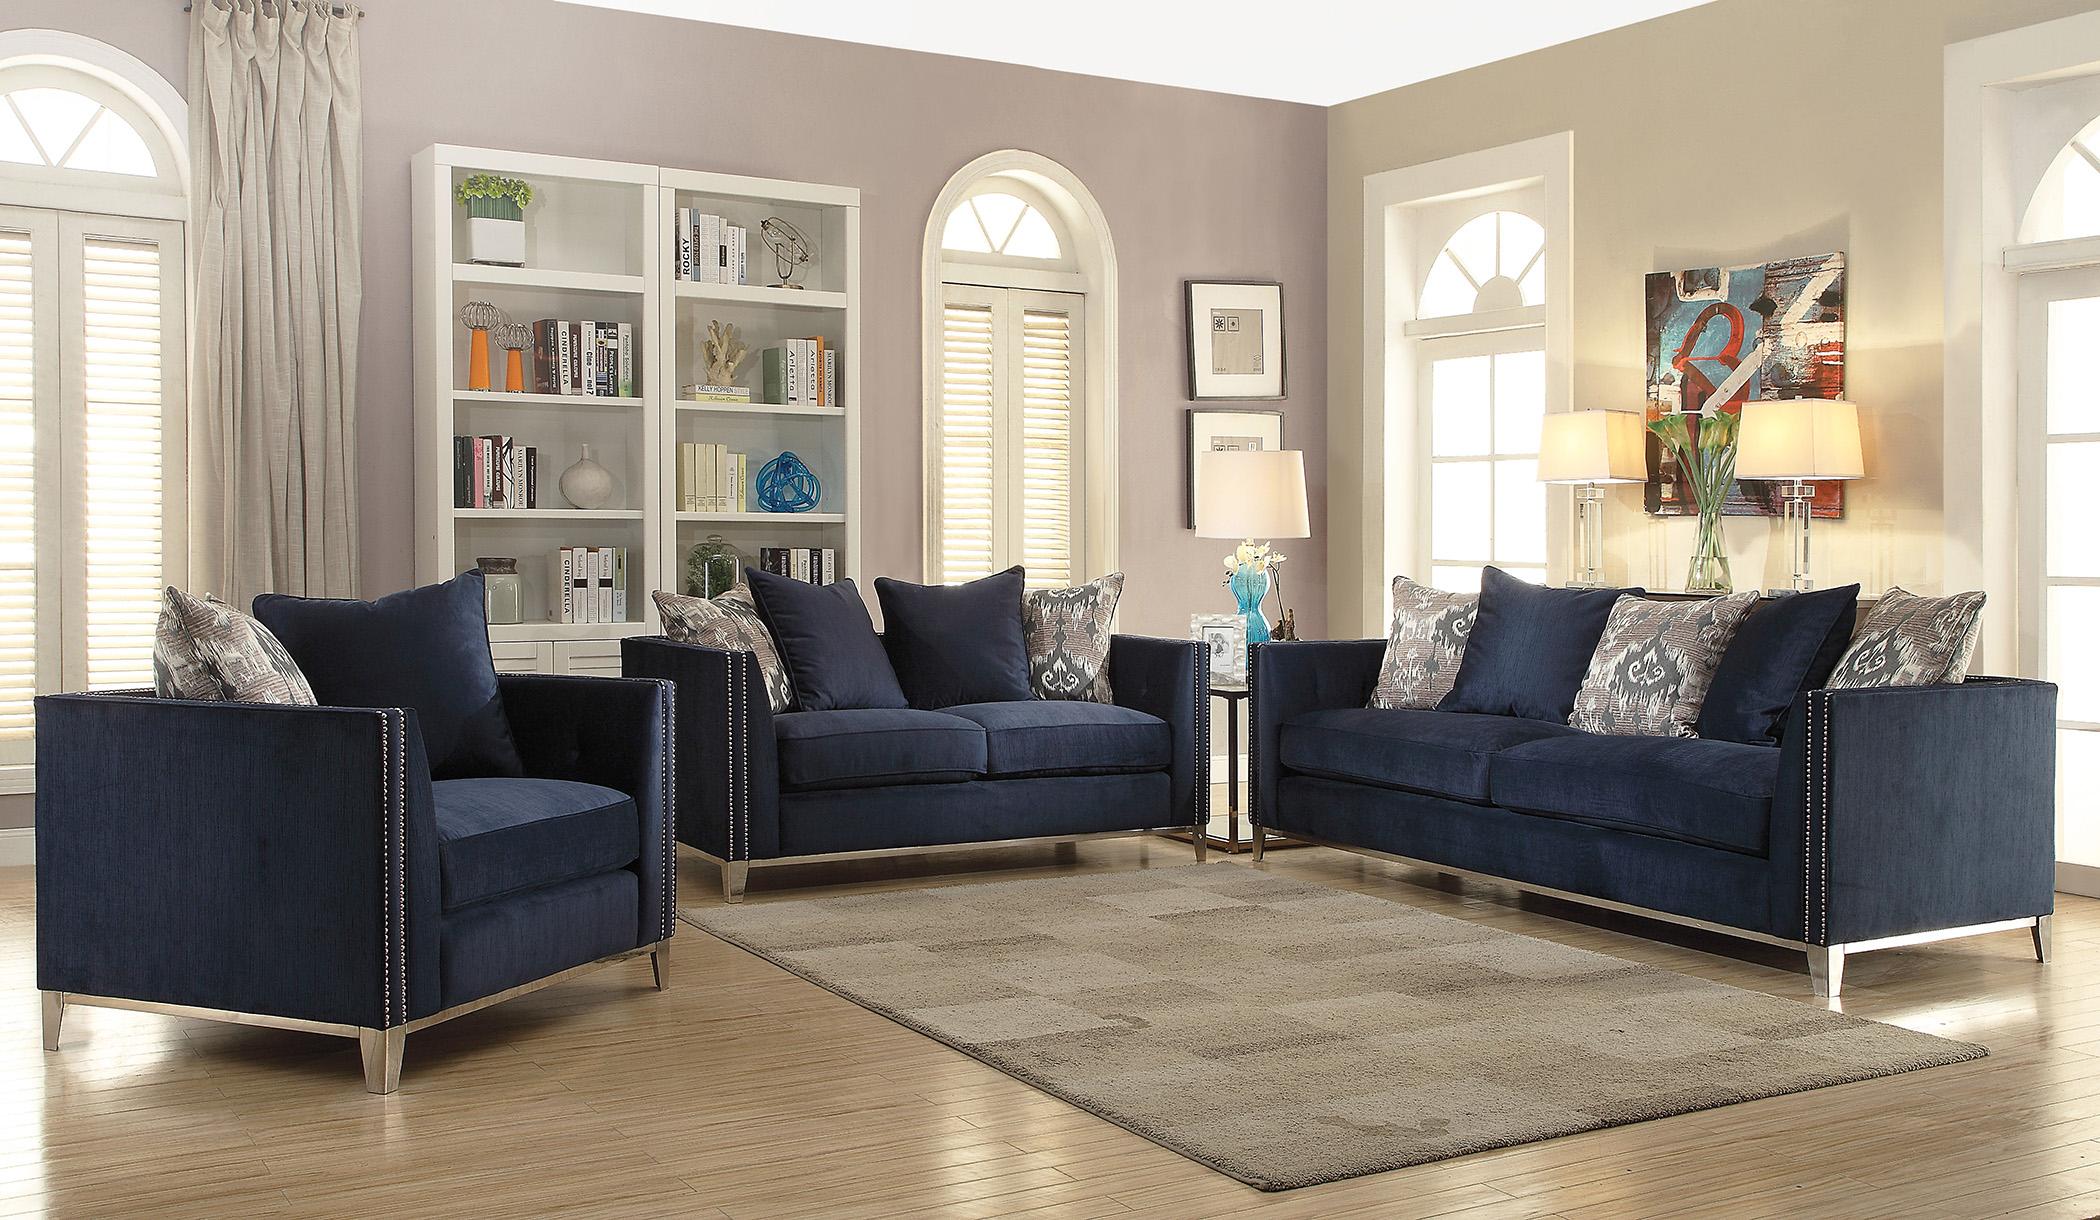 Classic, Traditional Sofa Loveseat and Chair Set Phaedra 52830 Phaedra-52830-Set-3 in Blue Fabric